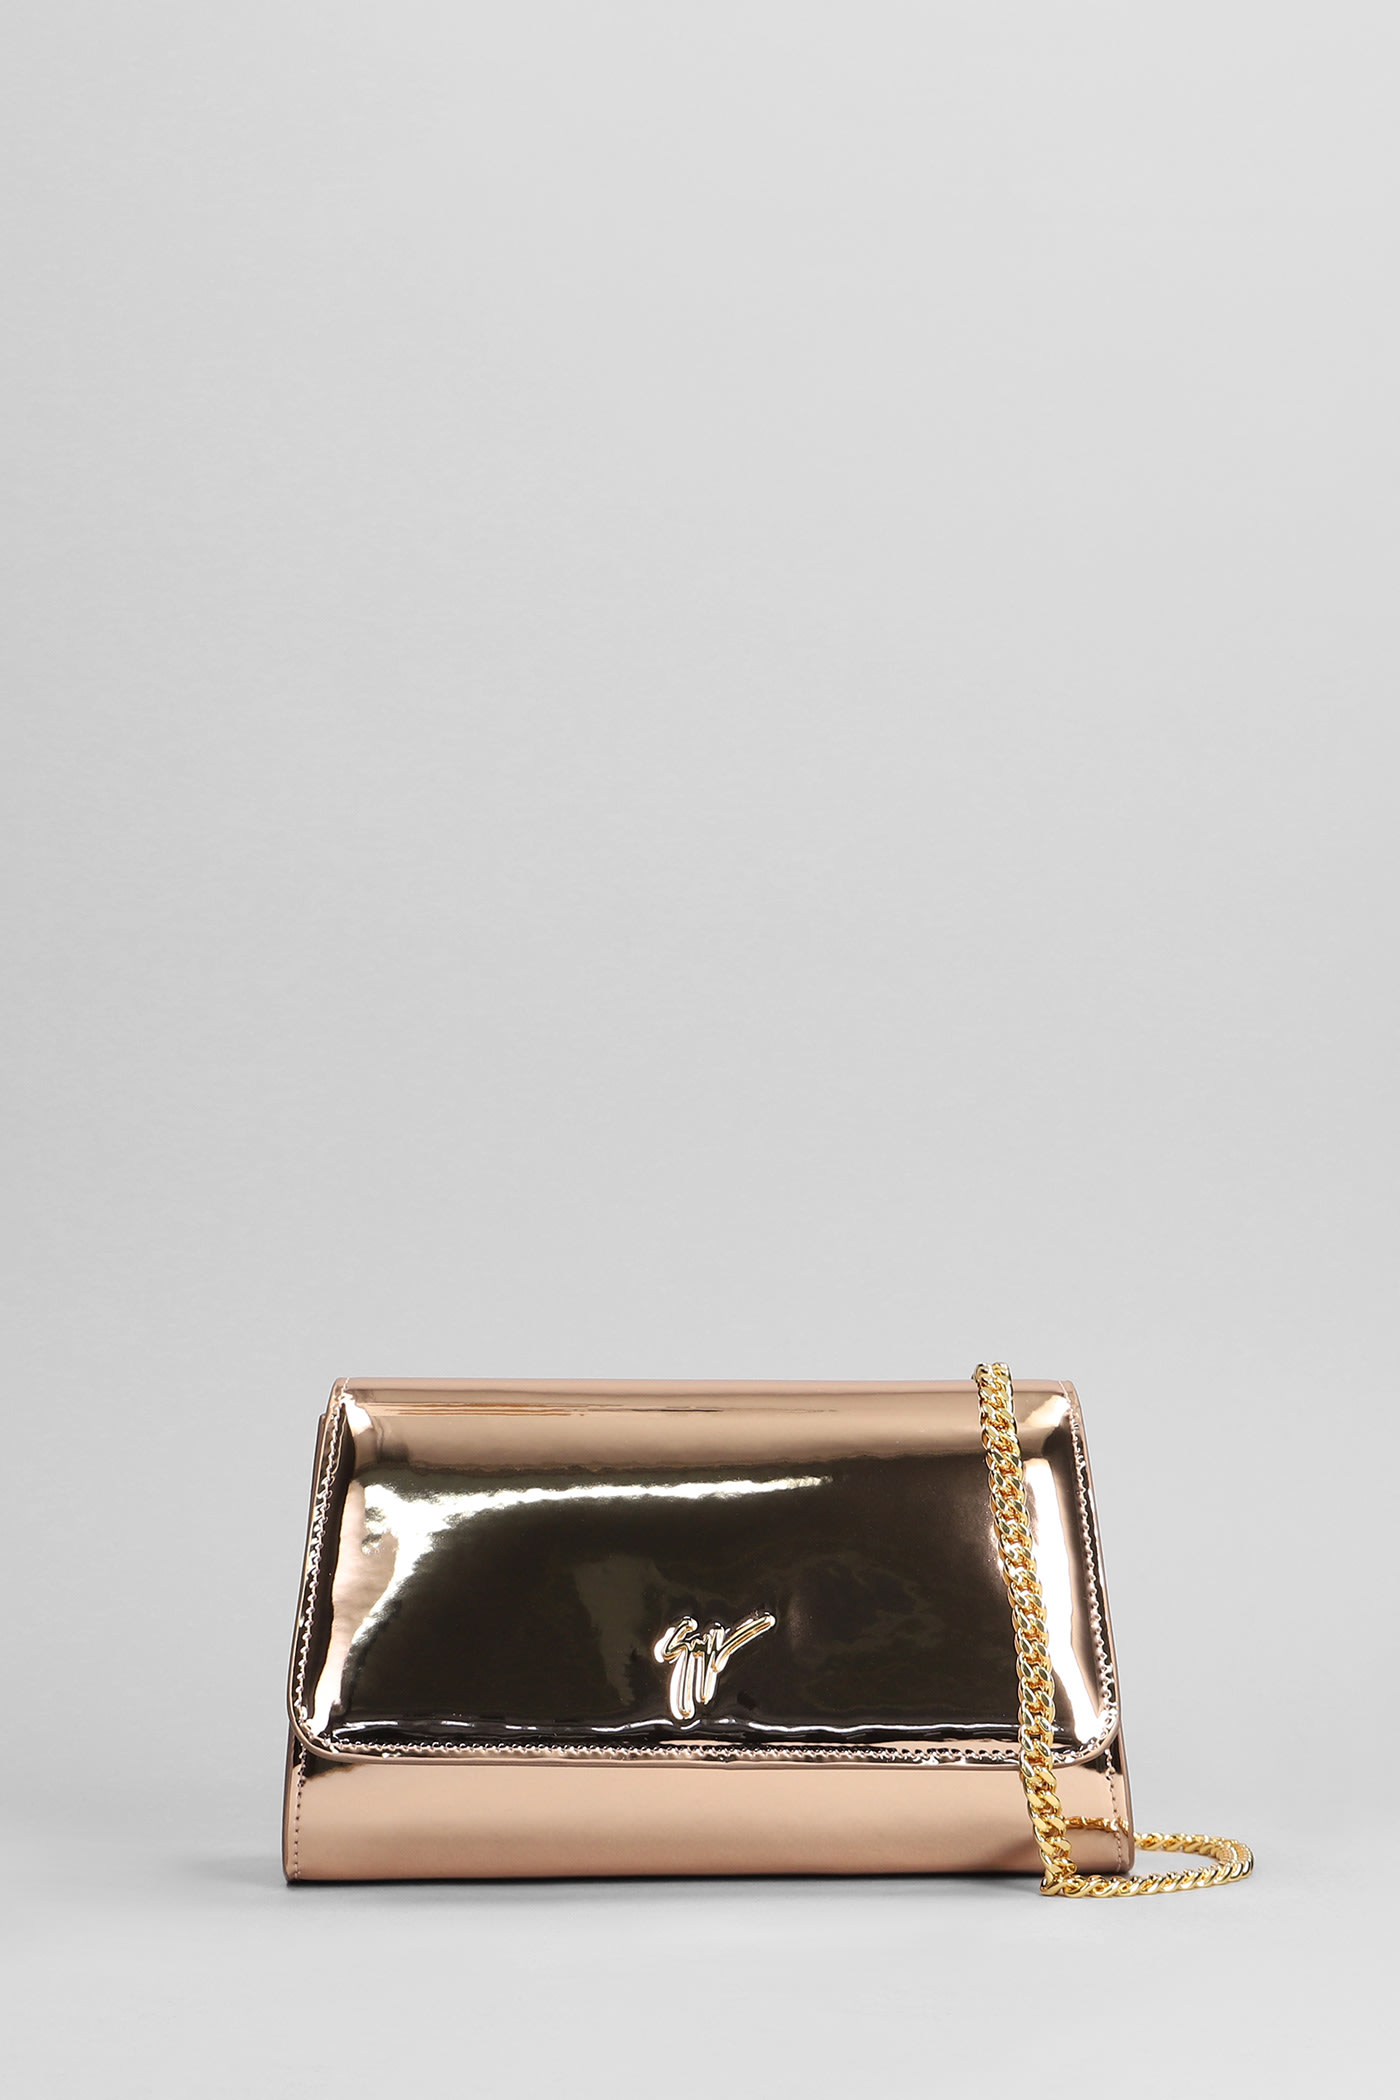 Giuseppe Zanotti Cleopatra Shoulder Bag In Copper Leather